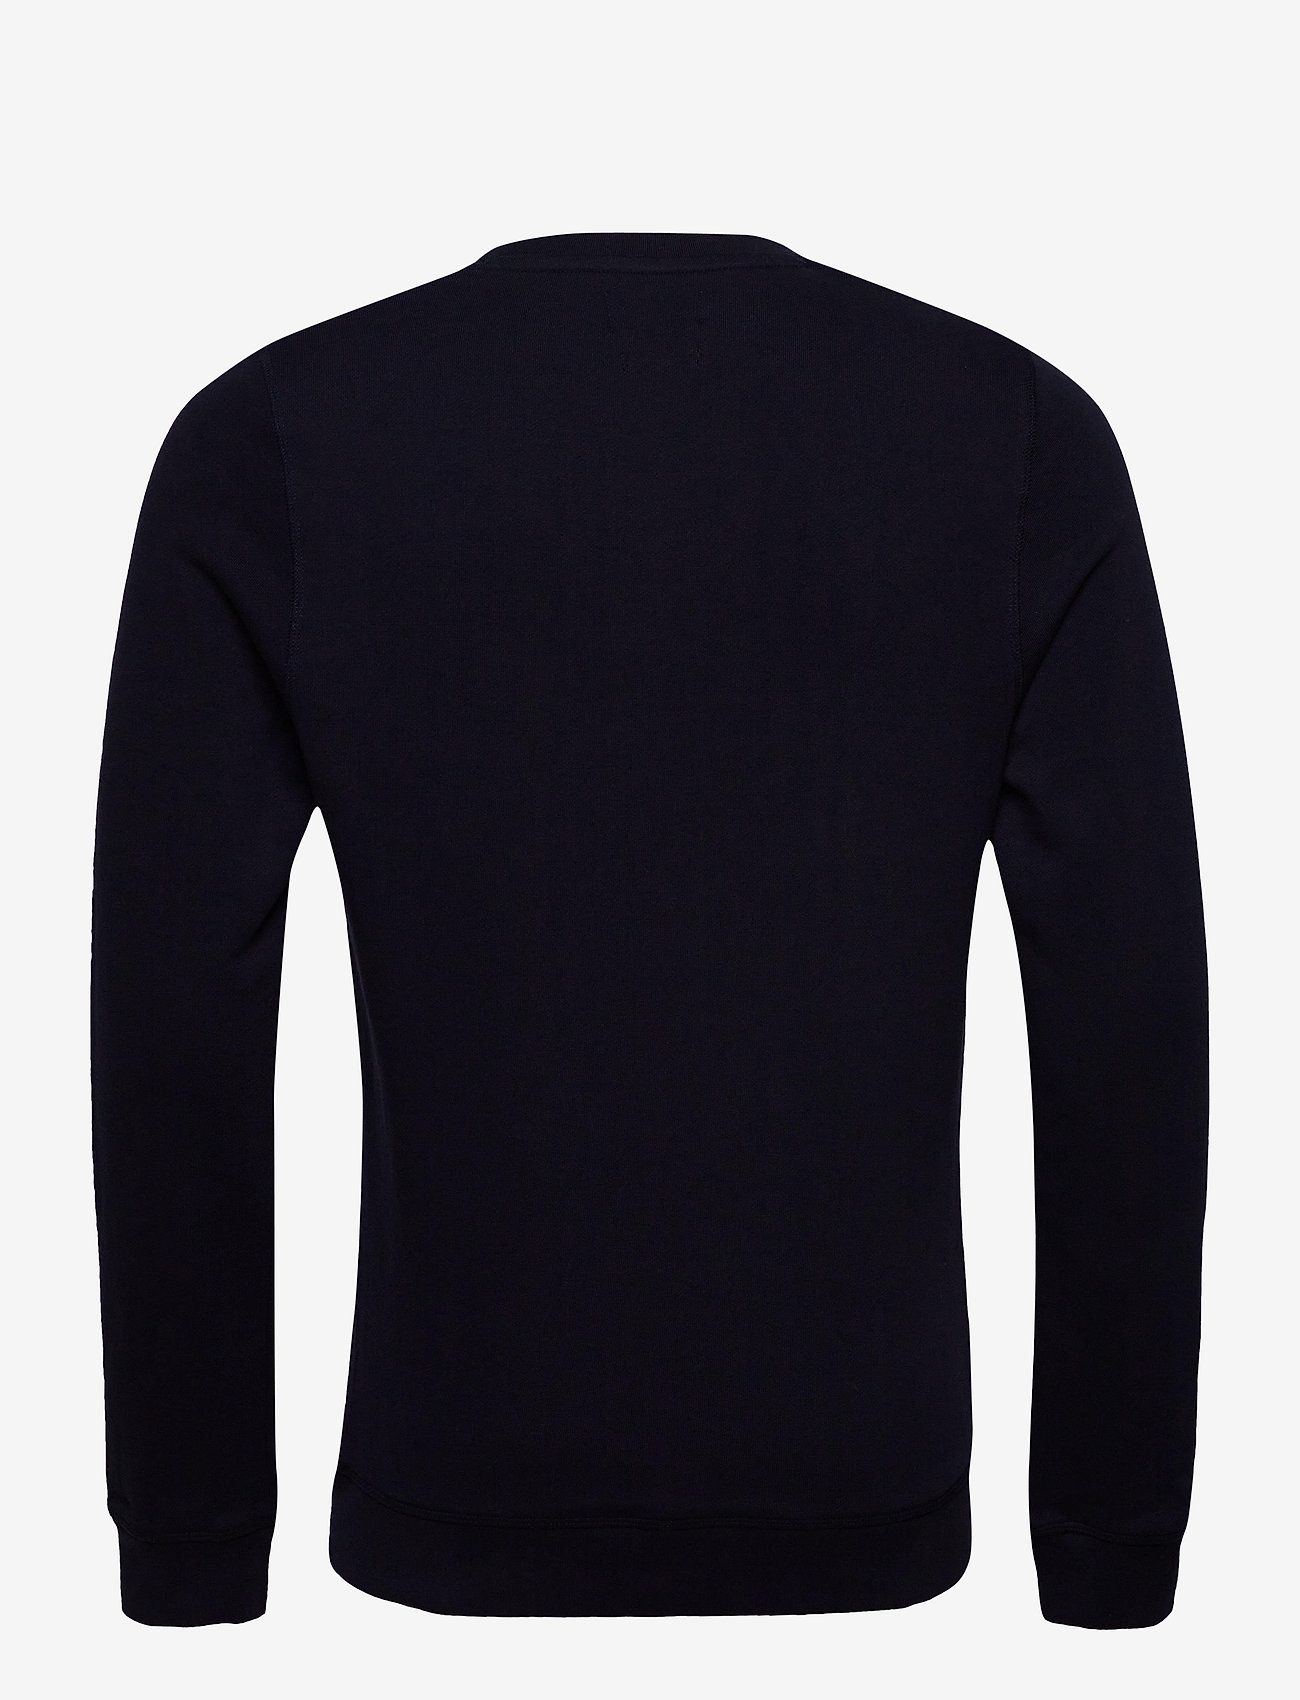 Lexington Clothing - Barry Organic Cotton Sweatshirt - medvilniniai megztiniai - dark blue - 1